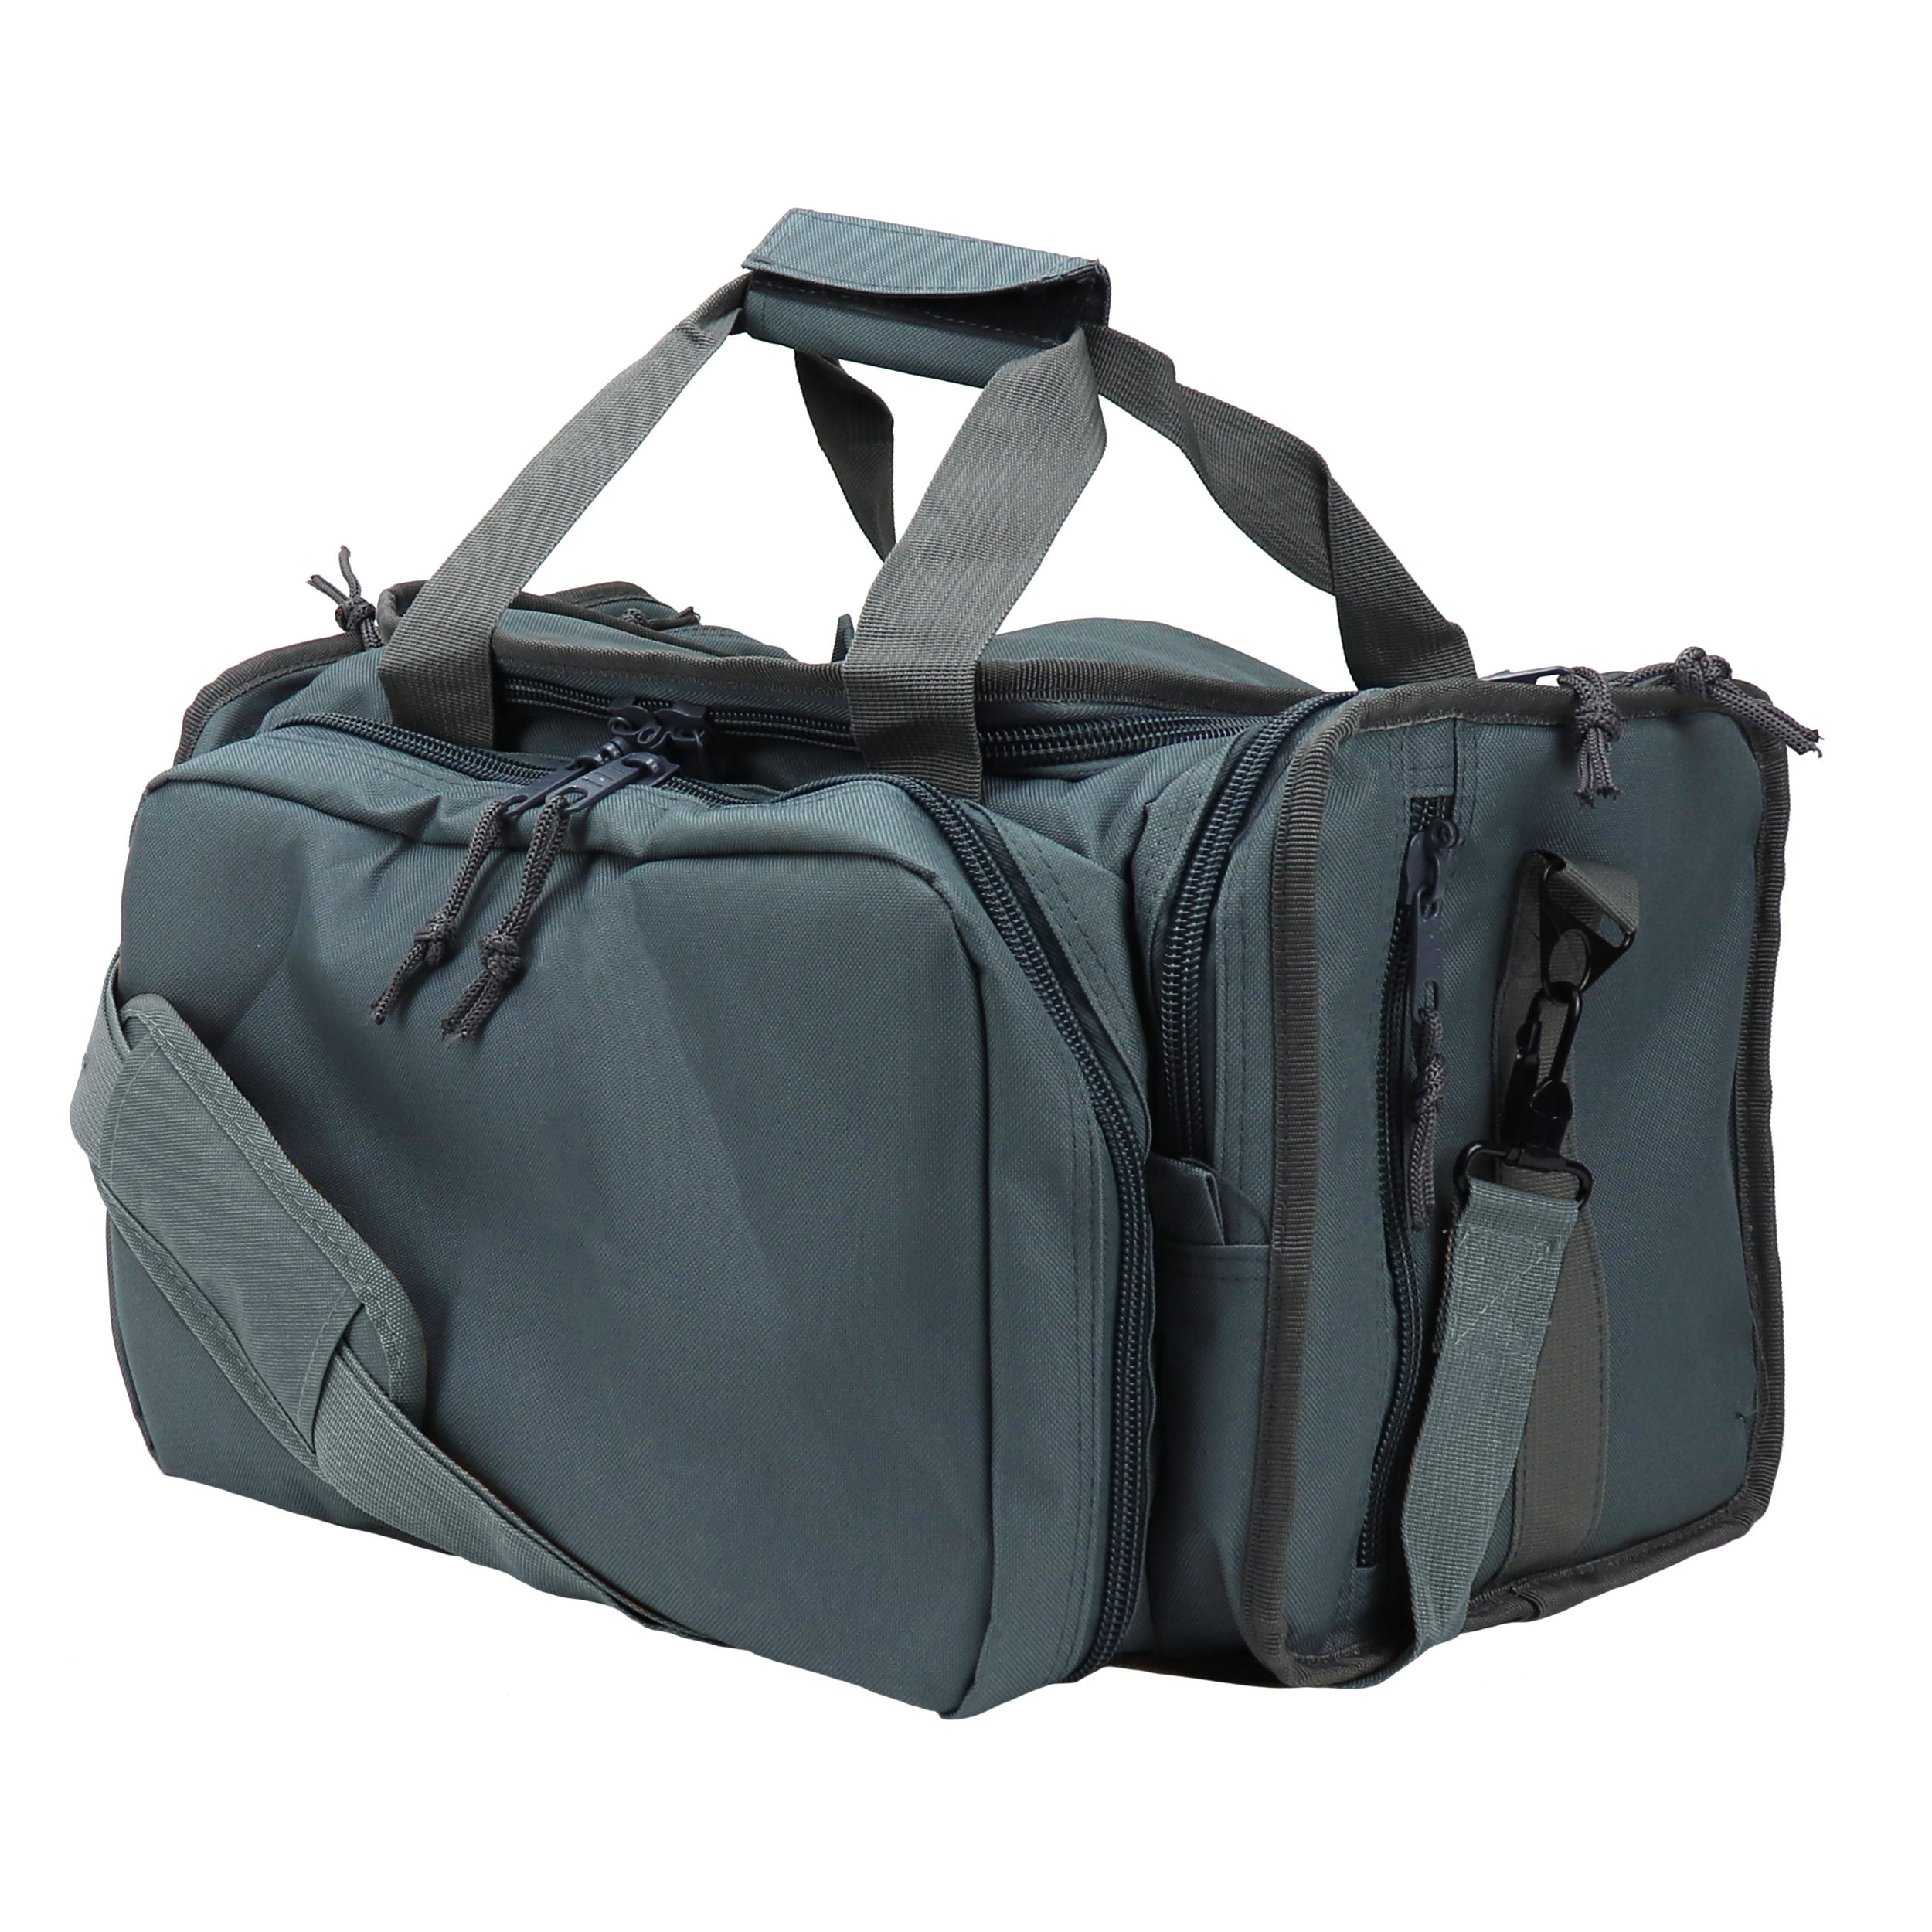 Travel Duffel OSAGE RIVER Tactical Range Bag for Handguns and Hunting